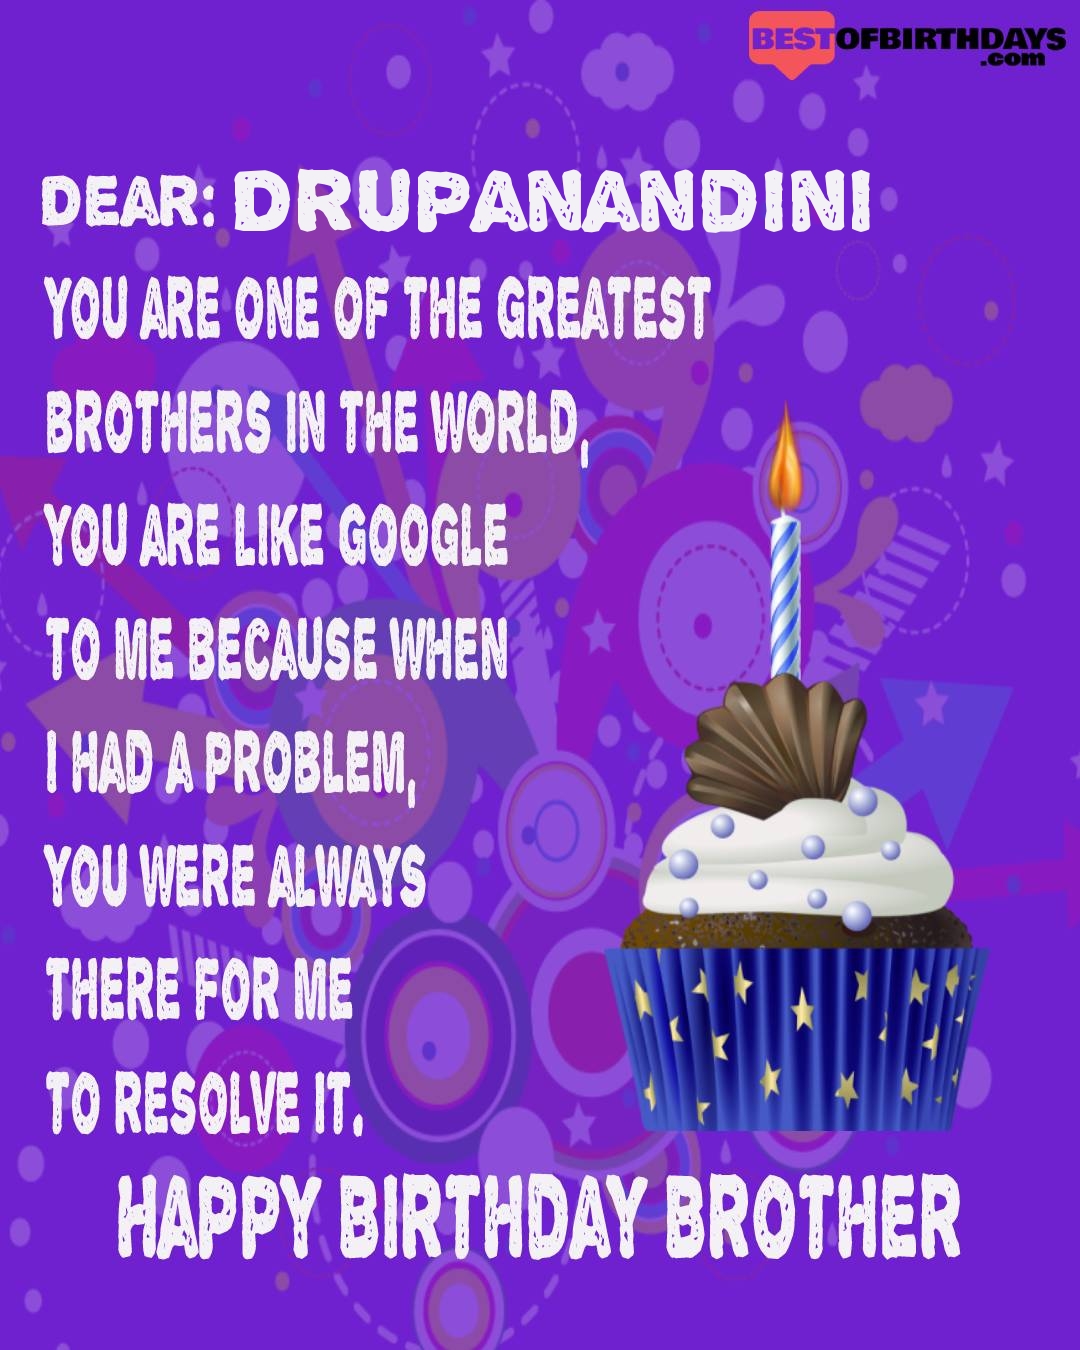 Happy birthday drupanandini bhai brother bro